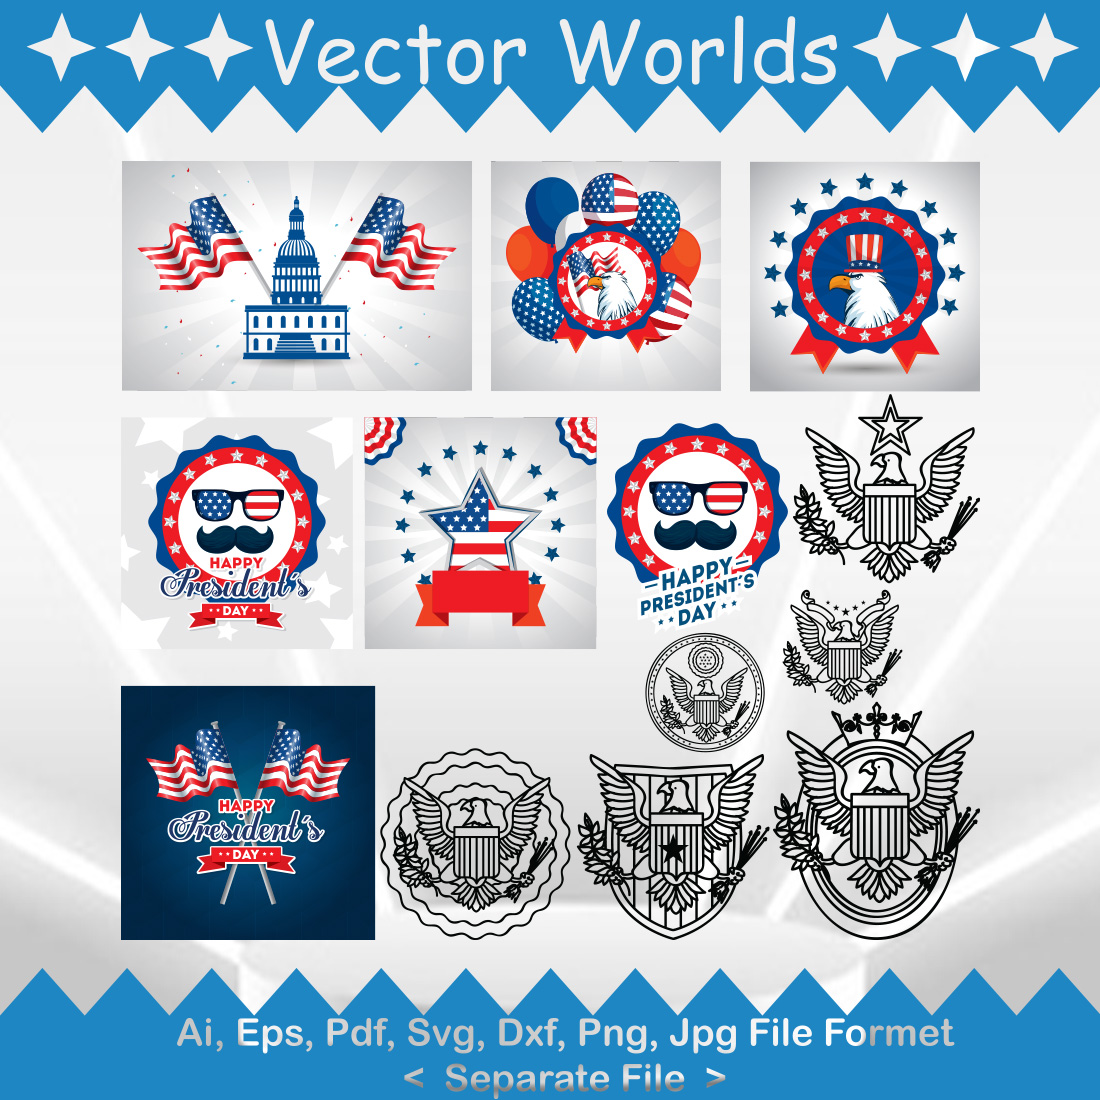 America Happy Day SVG Vector Design cover image.